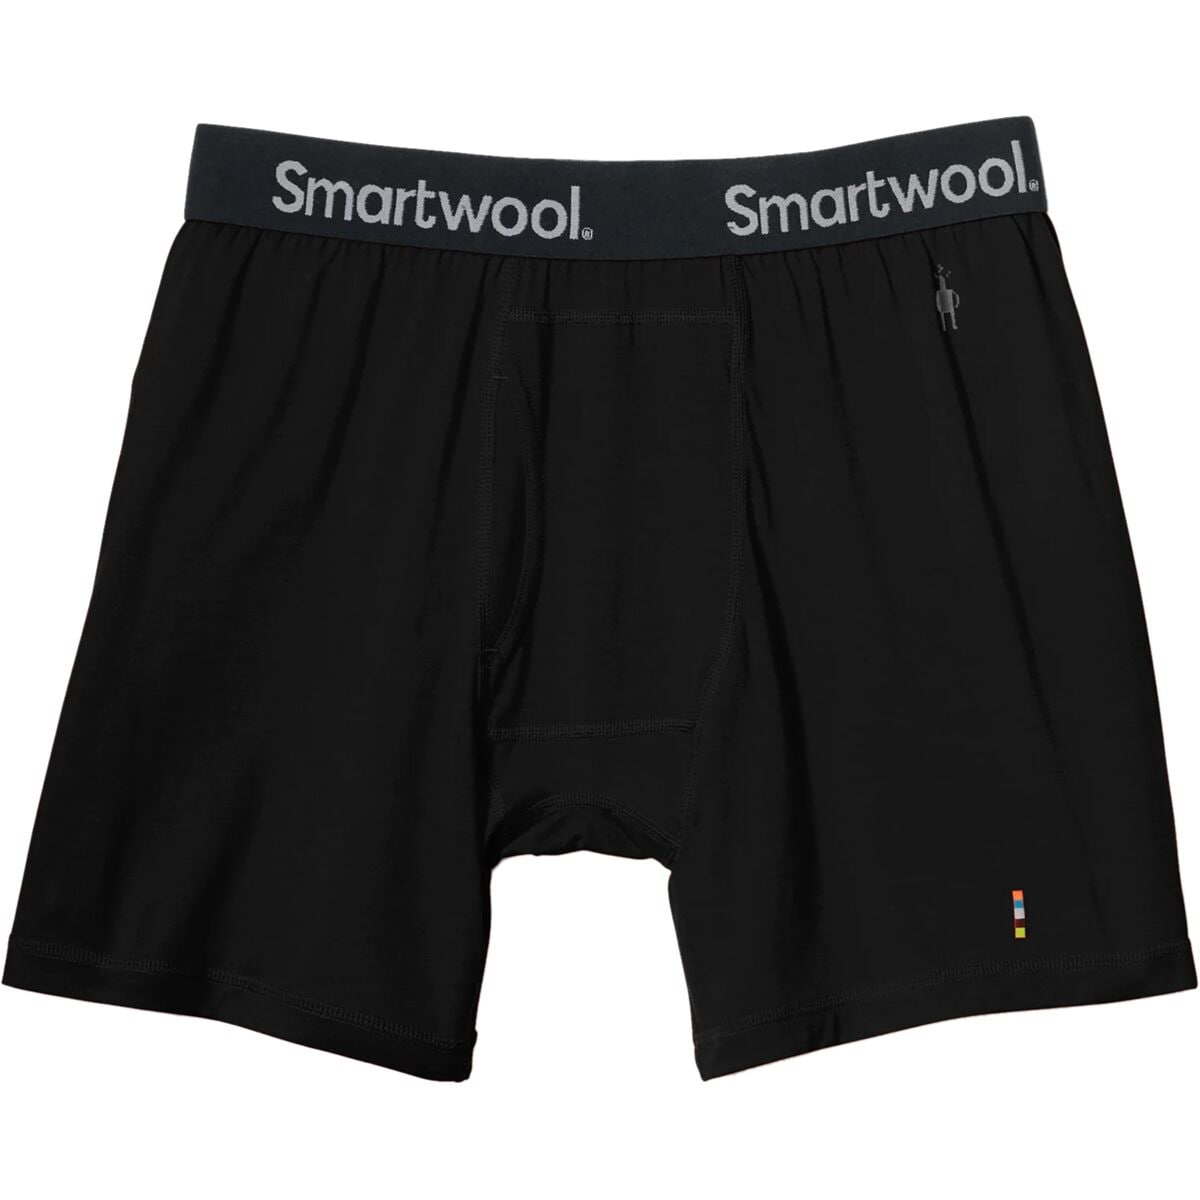 Smartwool Merino 150 Boxer Brief - Men's - Clothing